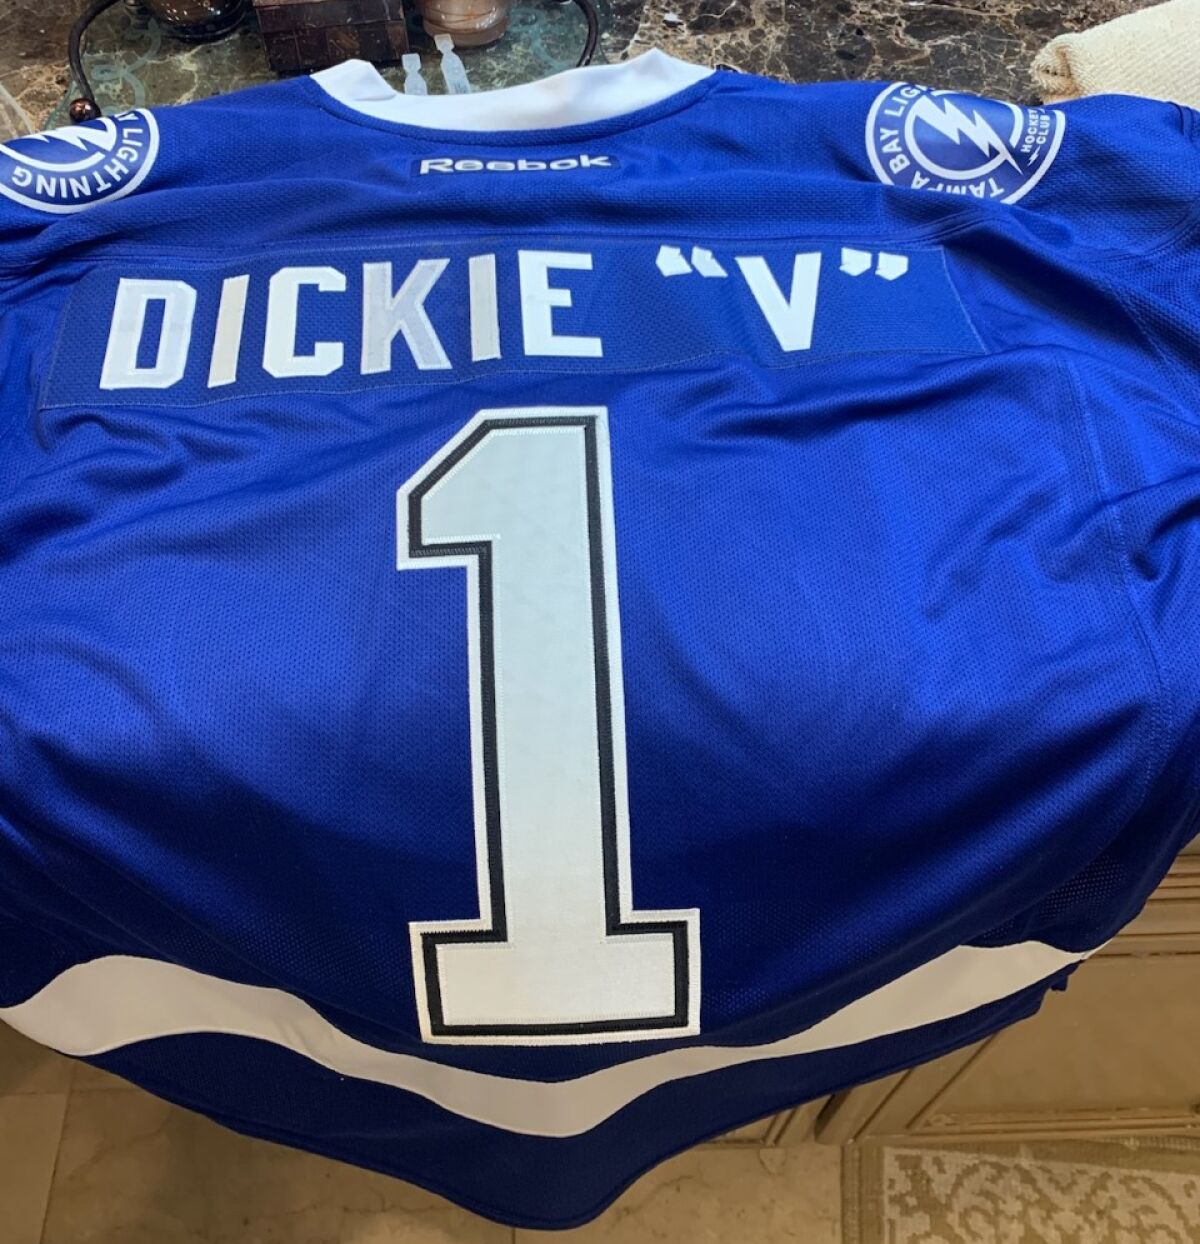 A "Dickie 'V'" Tampa Bay Lightning jersey